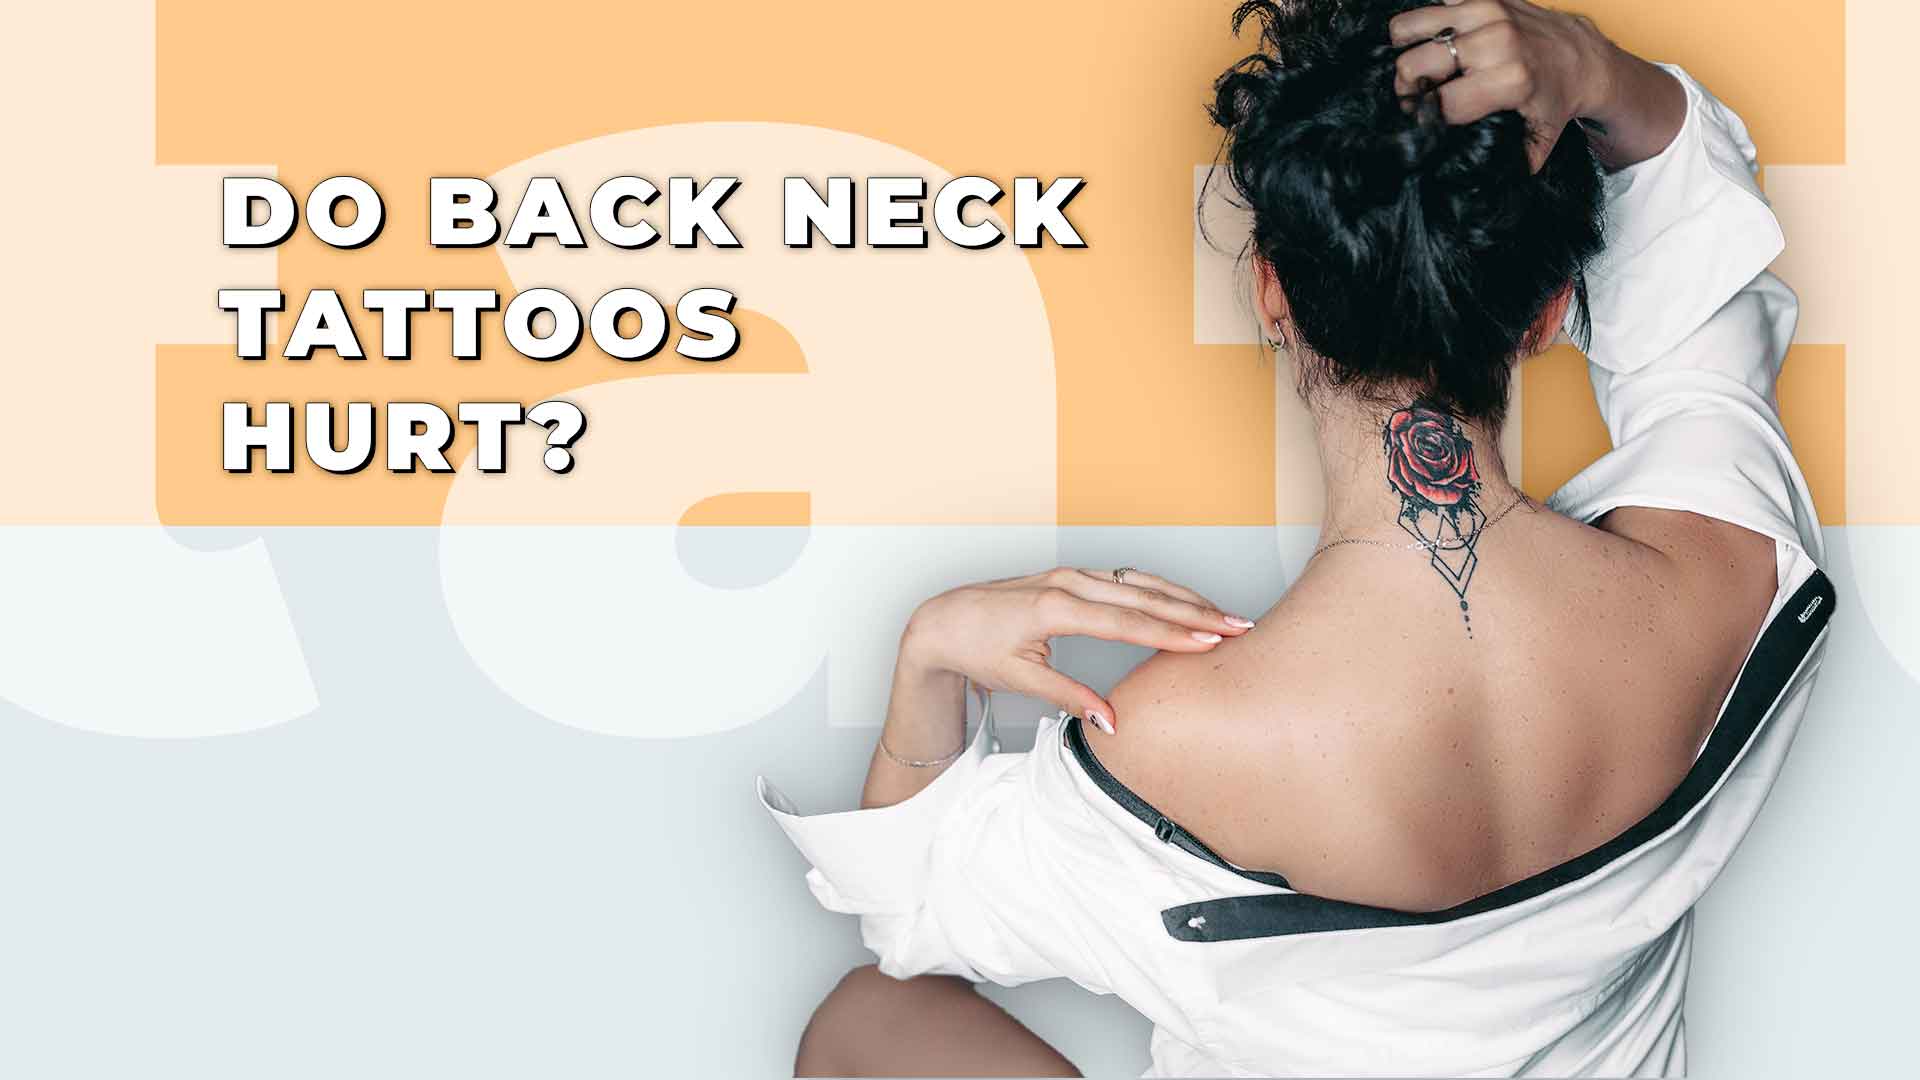 8 Beautiful Girls Tattoo Designs For Neck